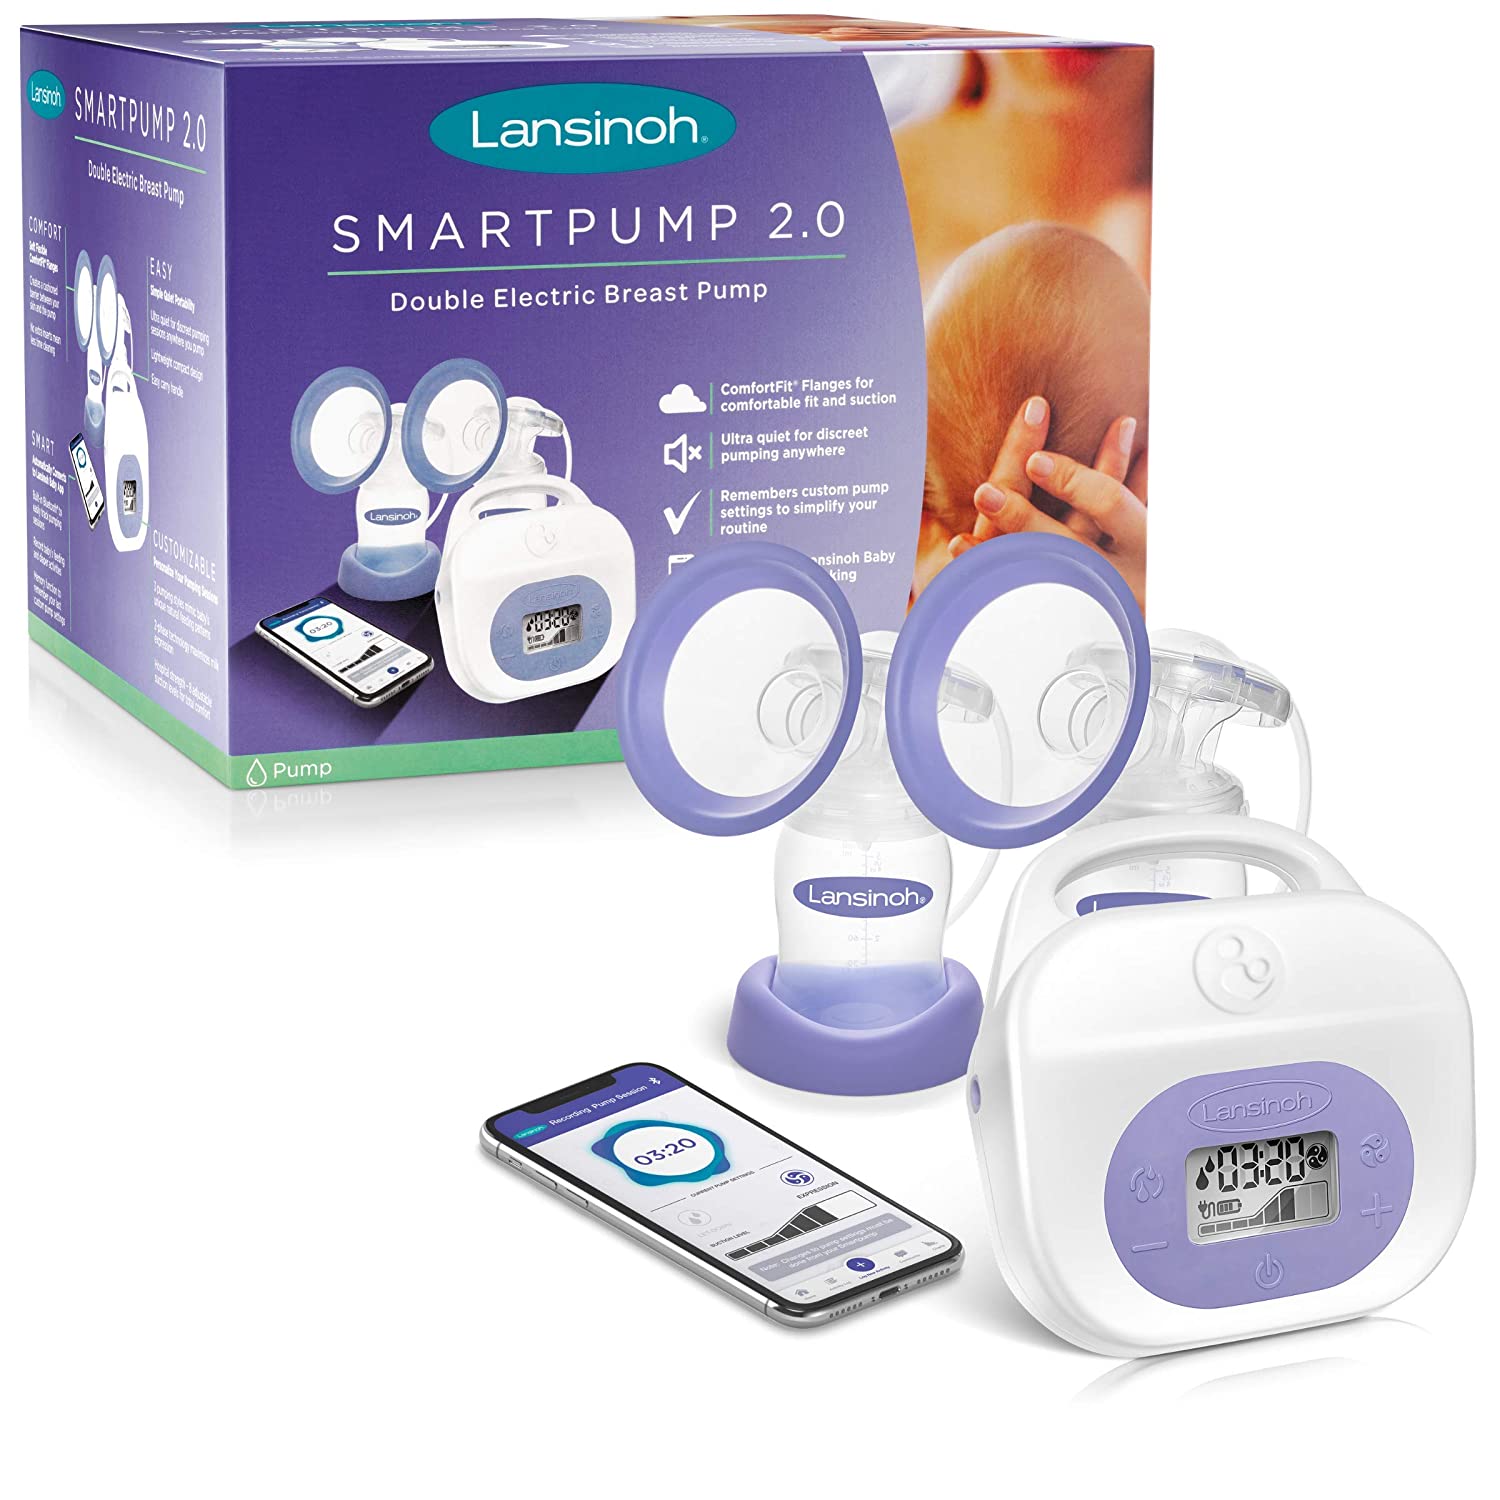 Lansinoh Smartpump 2.0 Double Electric Breastpump Kit